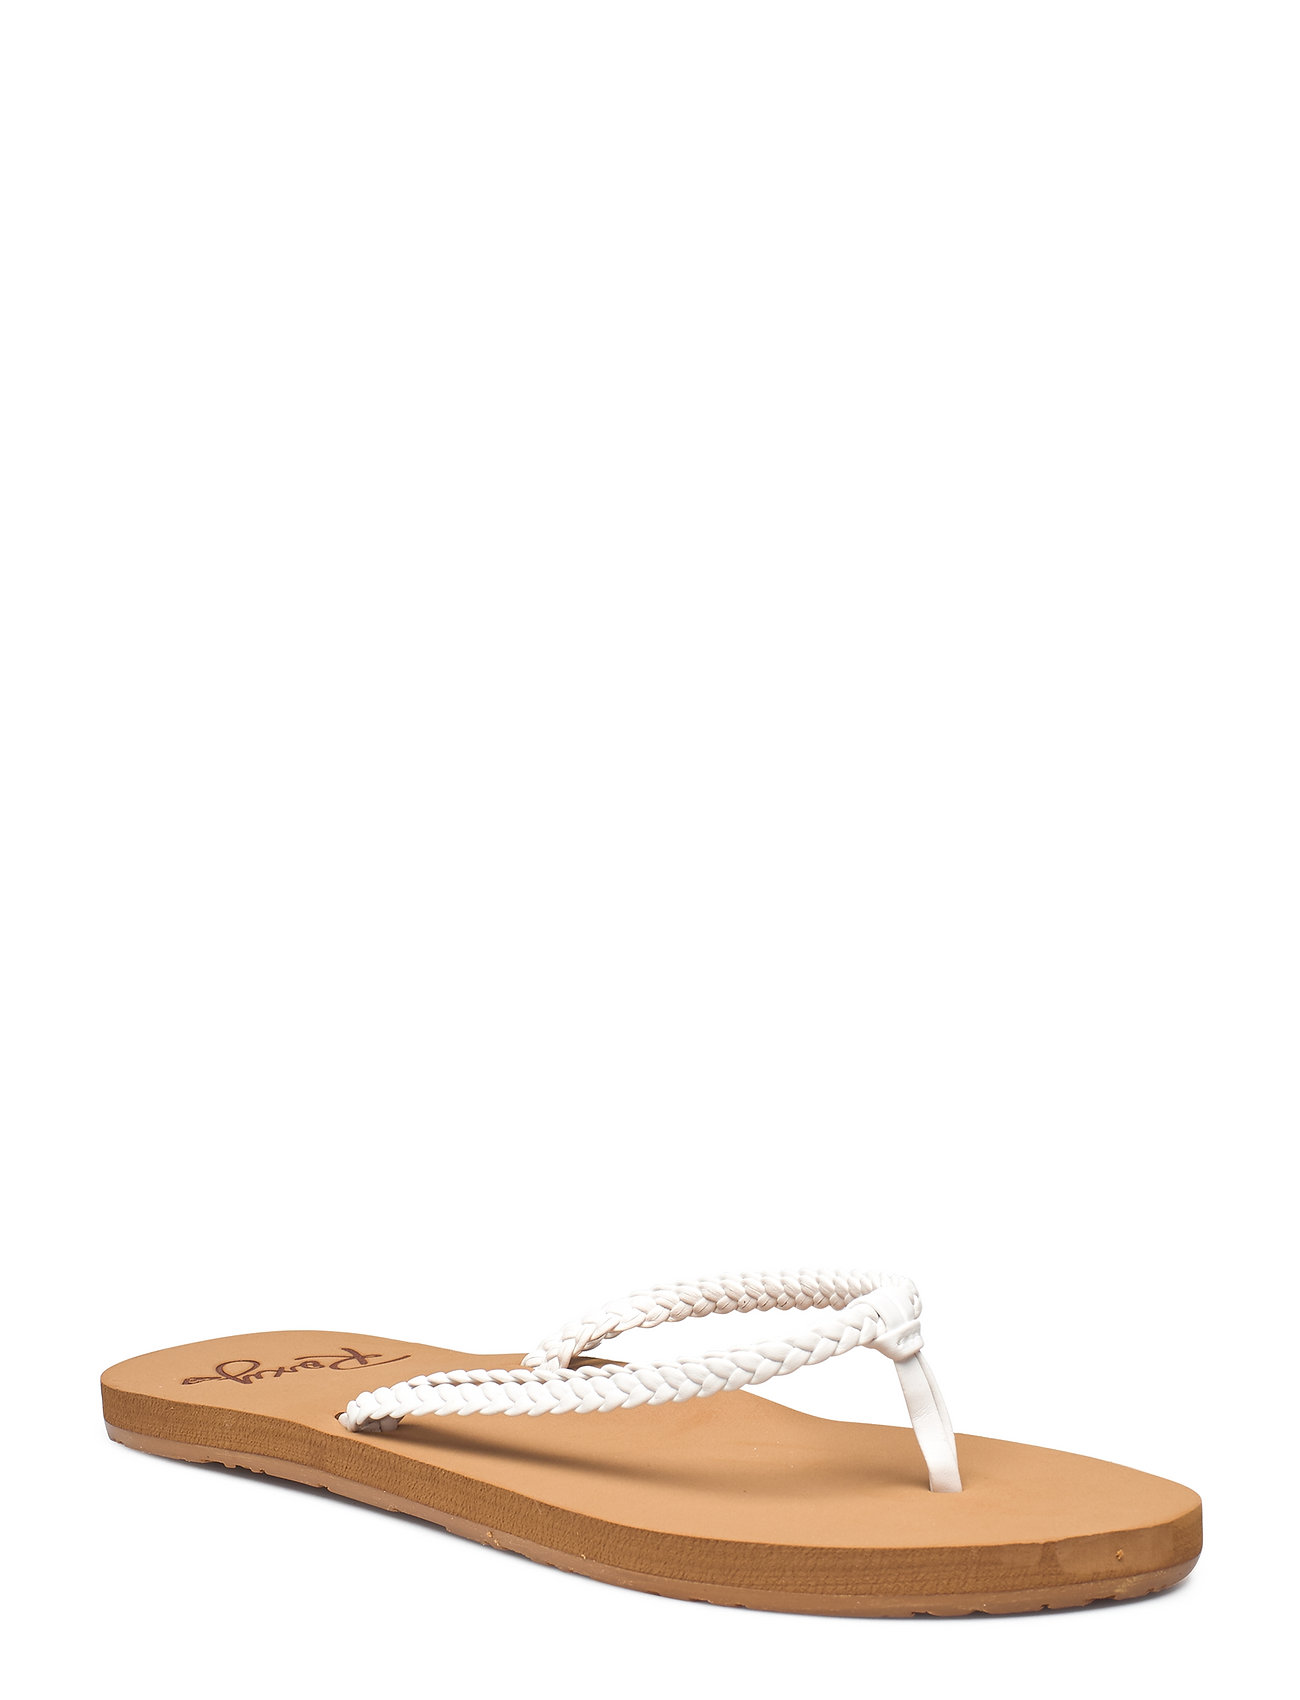 ROXY COSTAS Braided Sandal - White